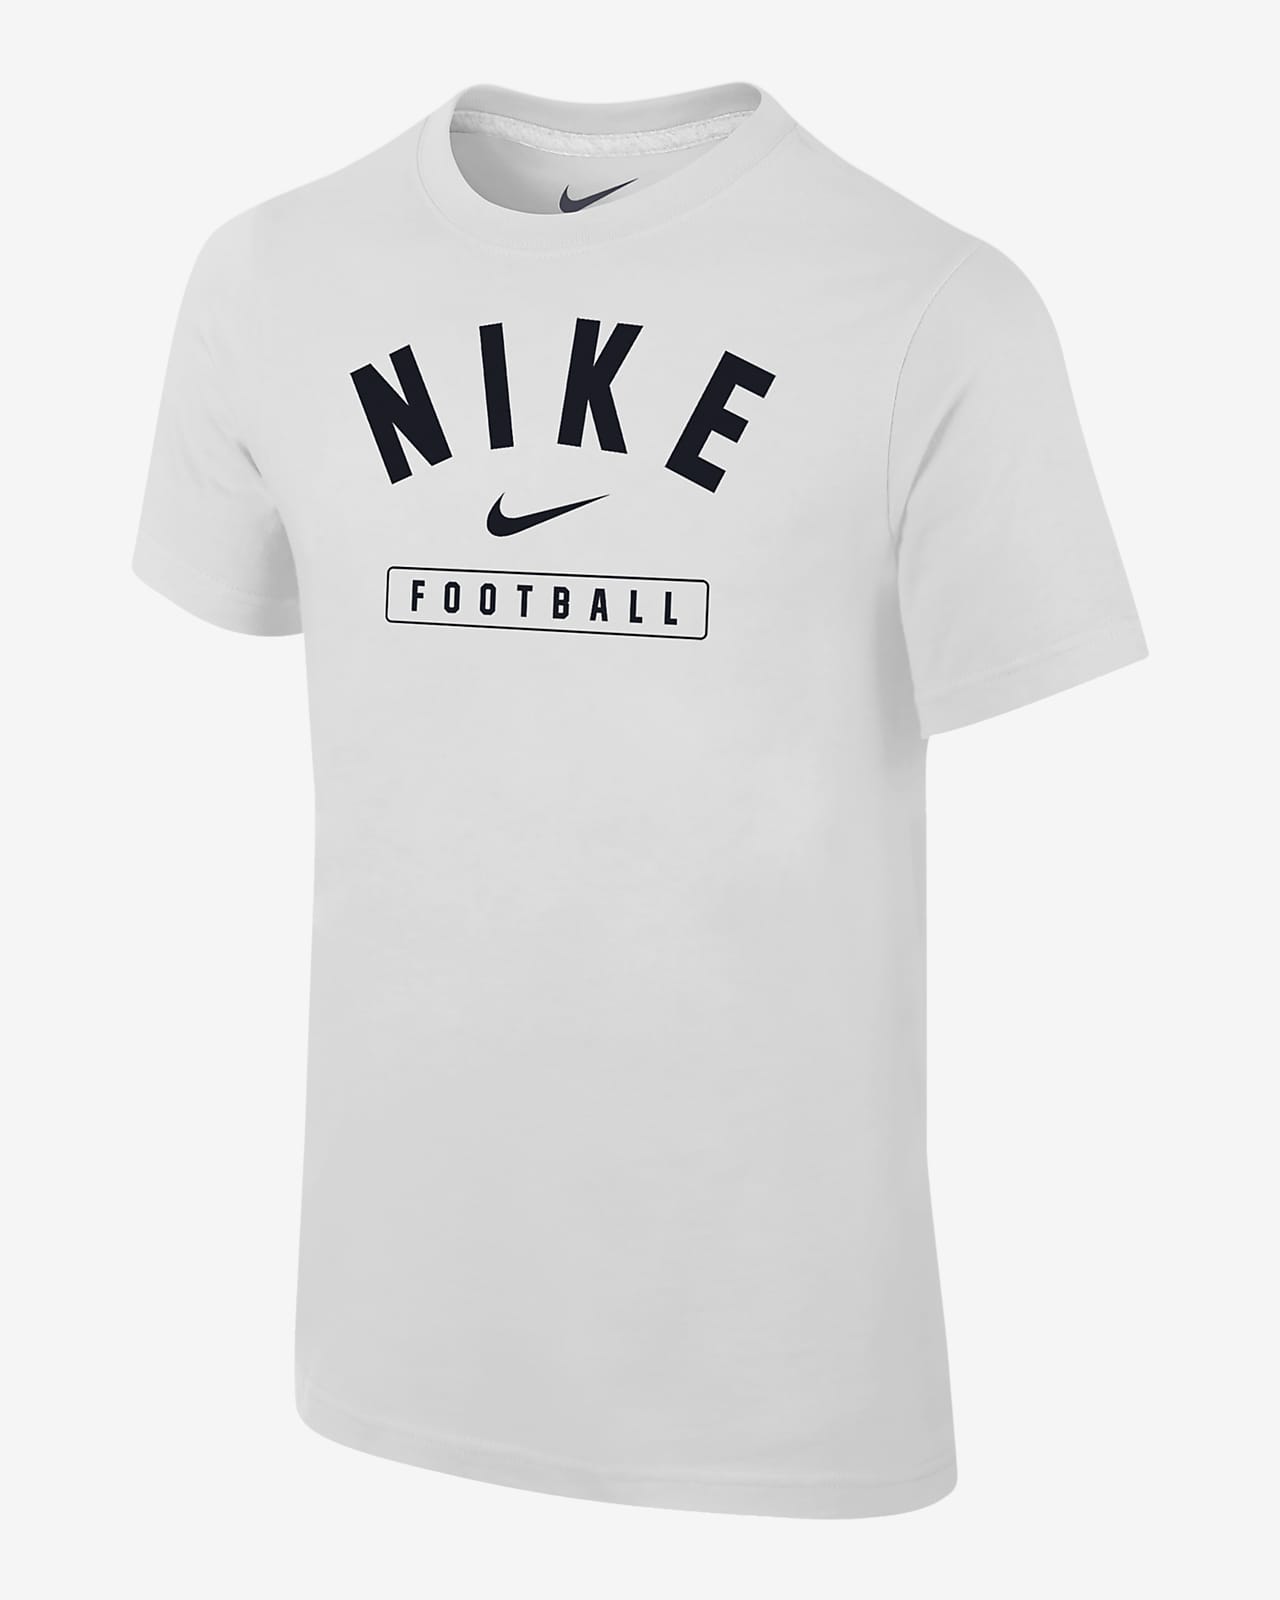 Nike Football Big Kids' (Boys') T-Shirt